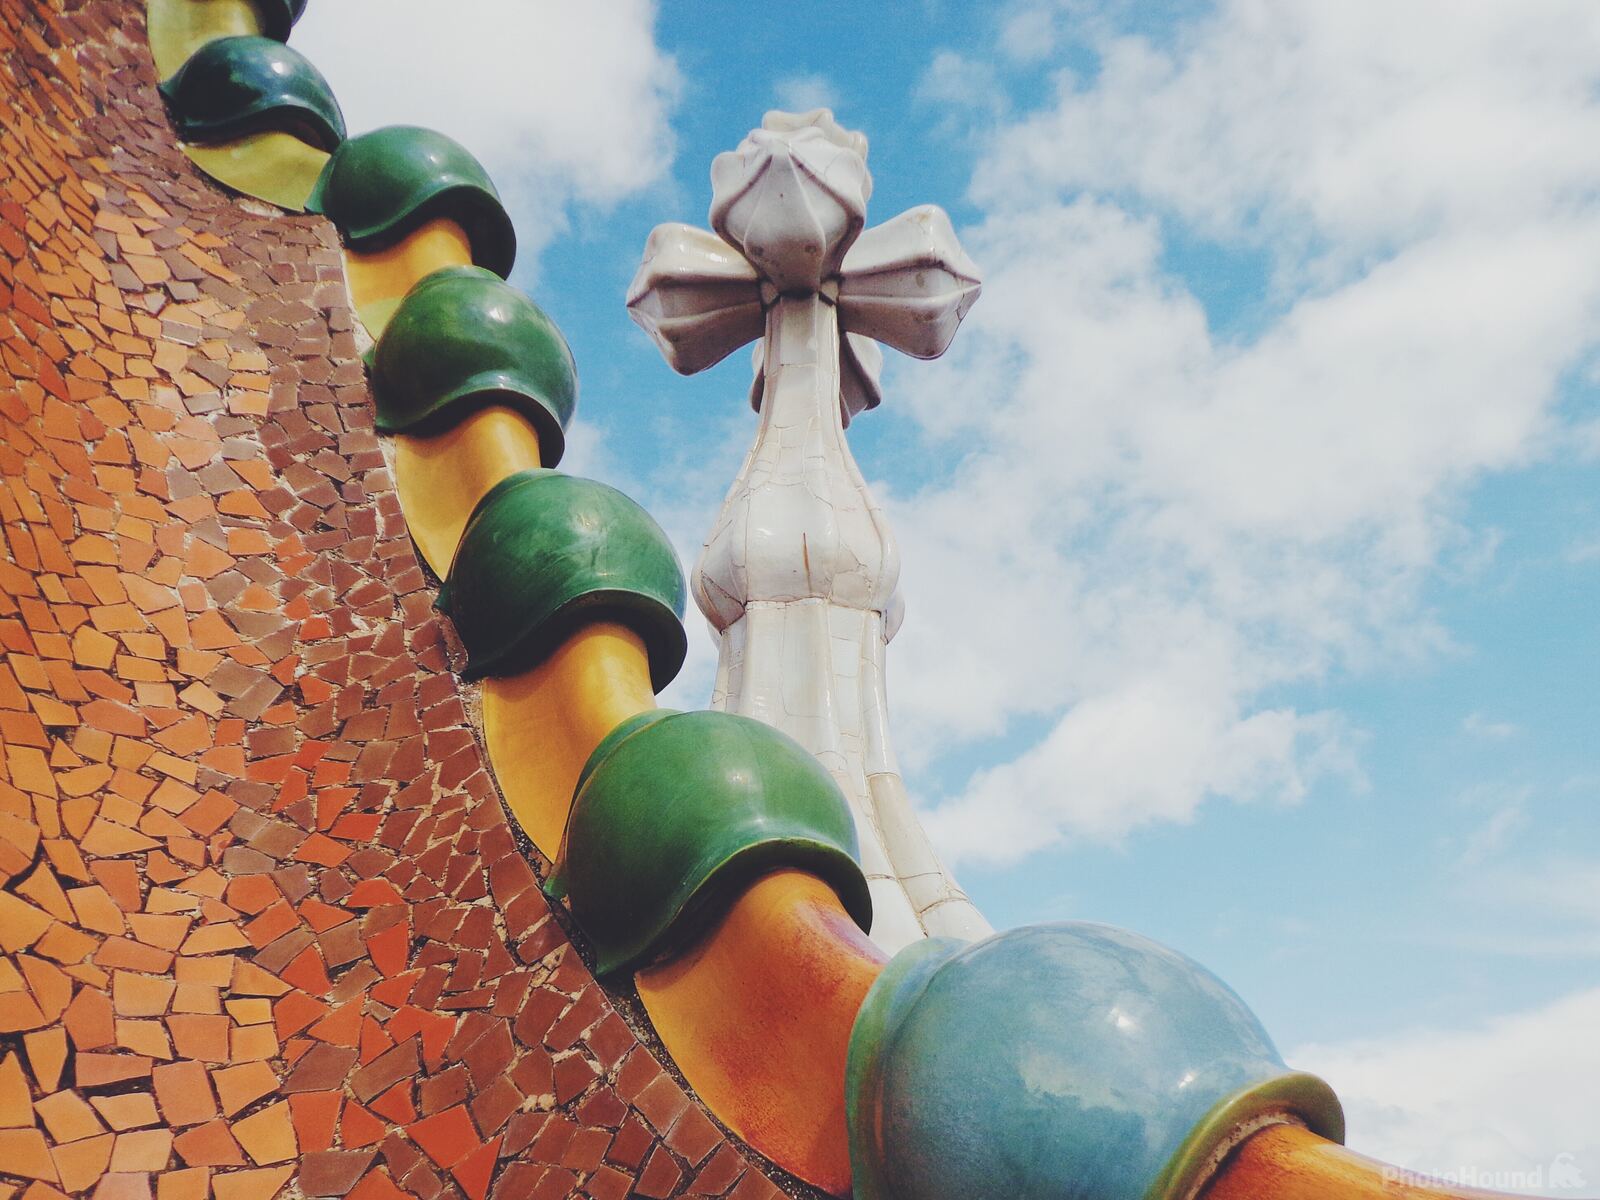 Image of Casa Batlló - Interior by Team PhotoHound